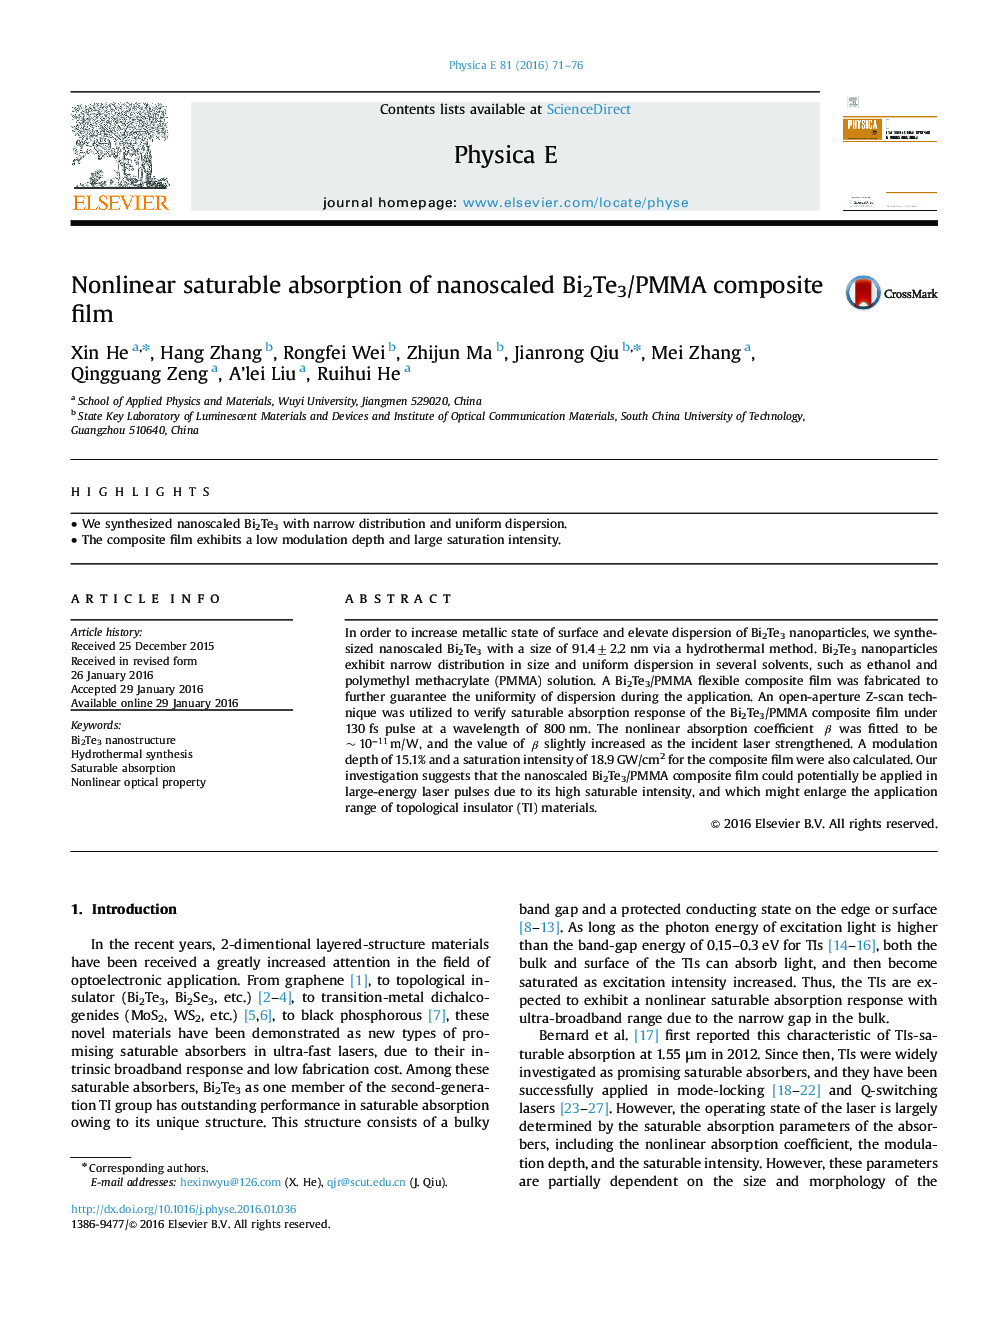 Nonlinear saturable absorption of nanoscaled Bi2Te3/PMMA composite film